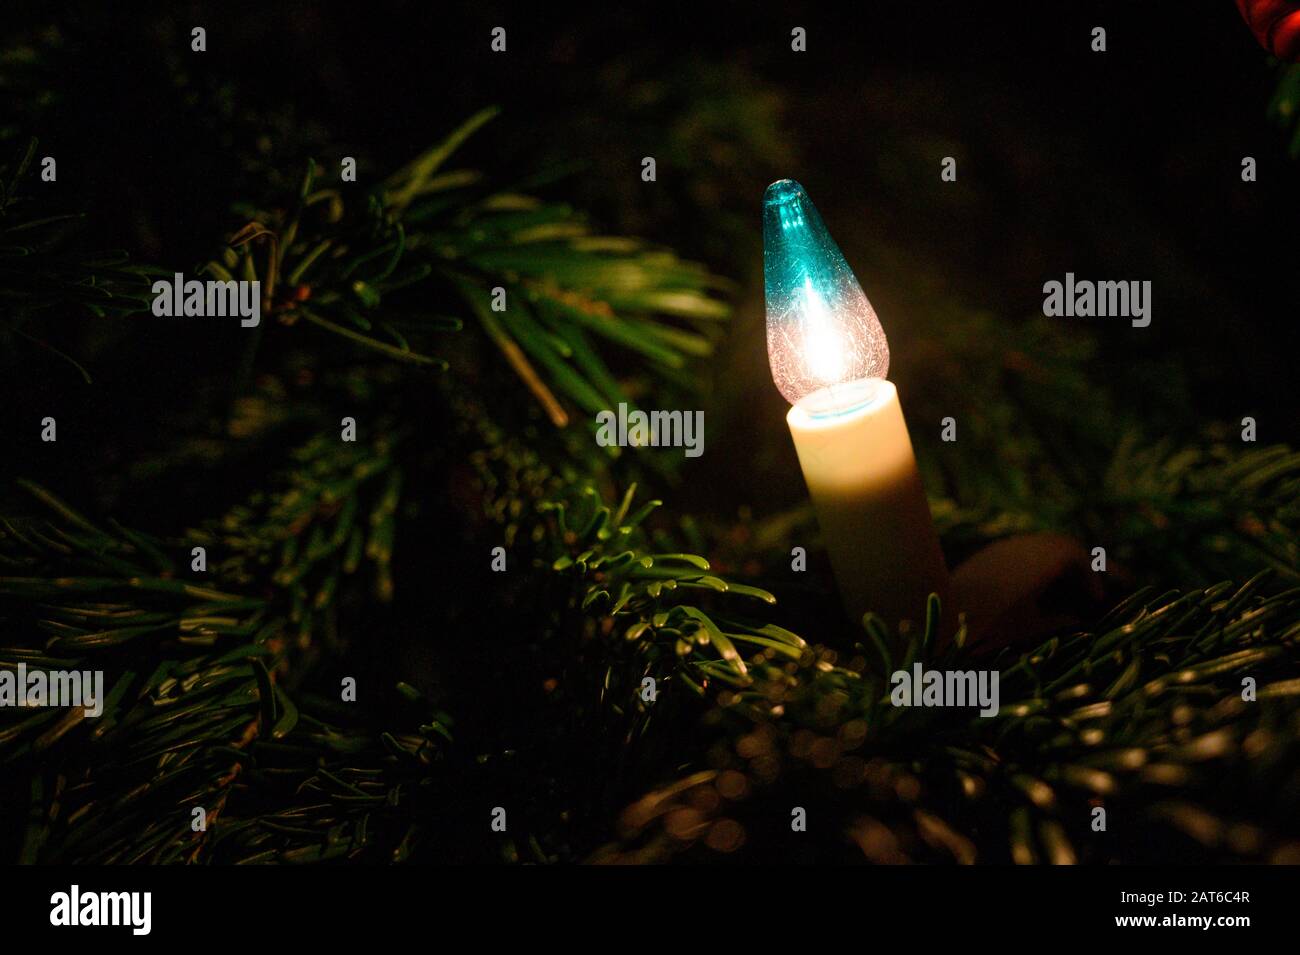 a light bulb on a Christmas tree Stock Photo